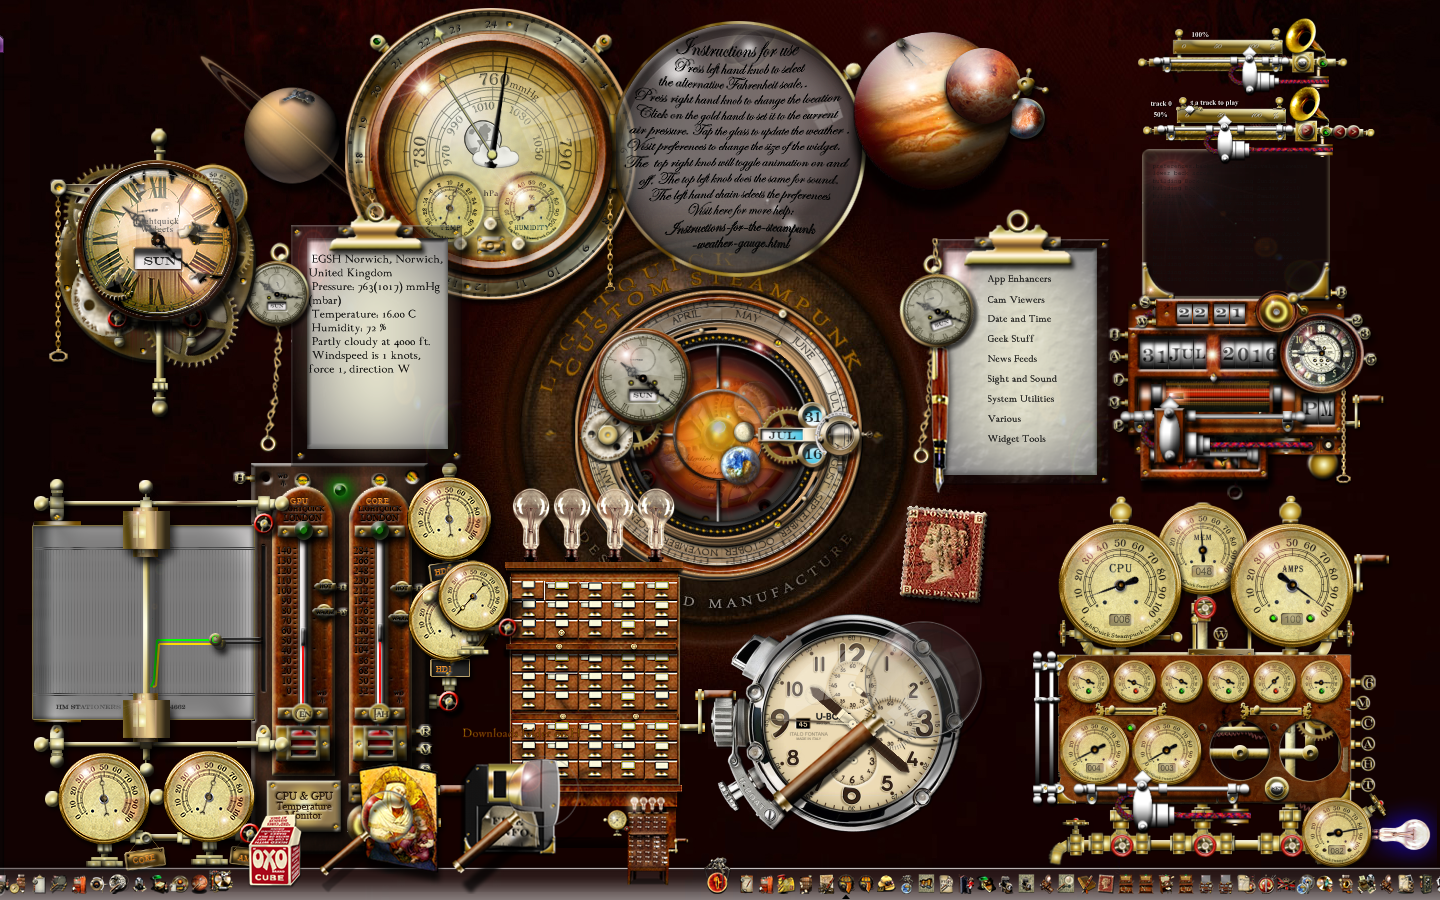 Steampunk XP desktop using widgets and rocketdock